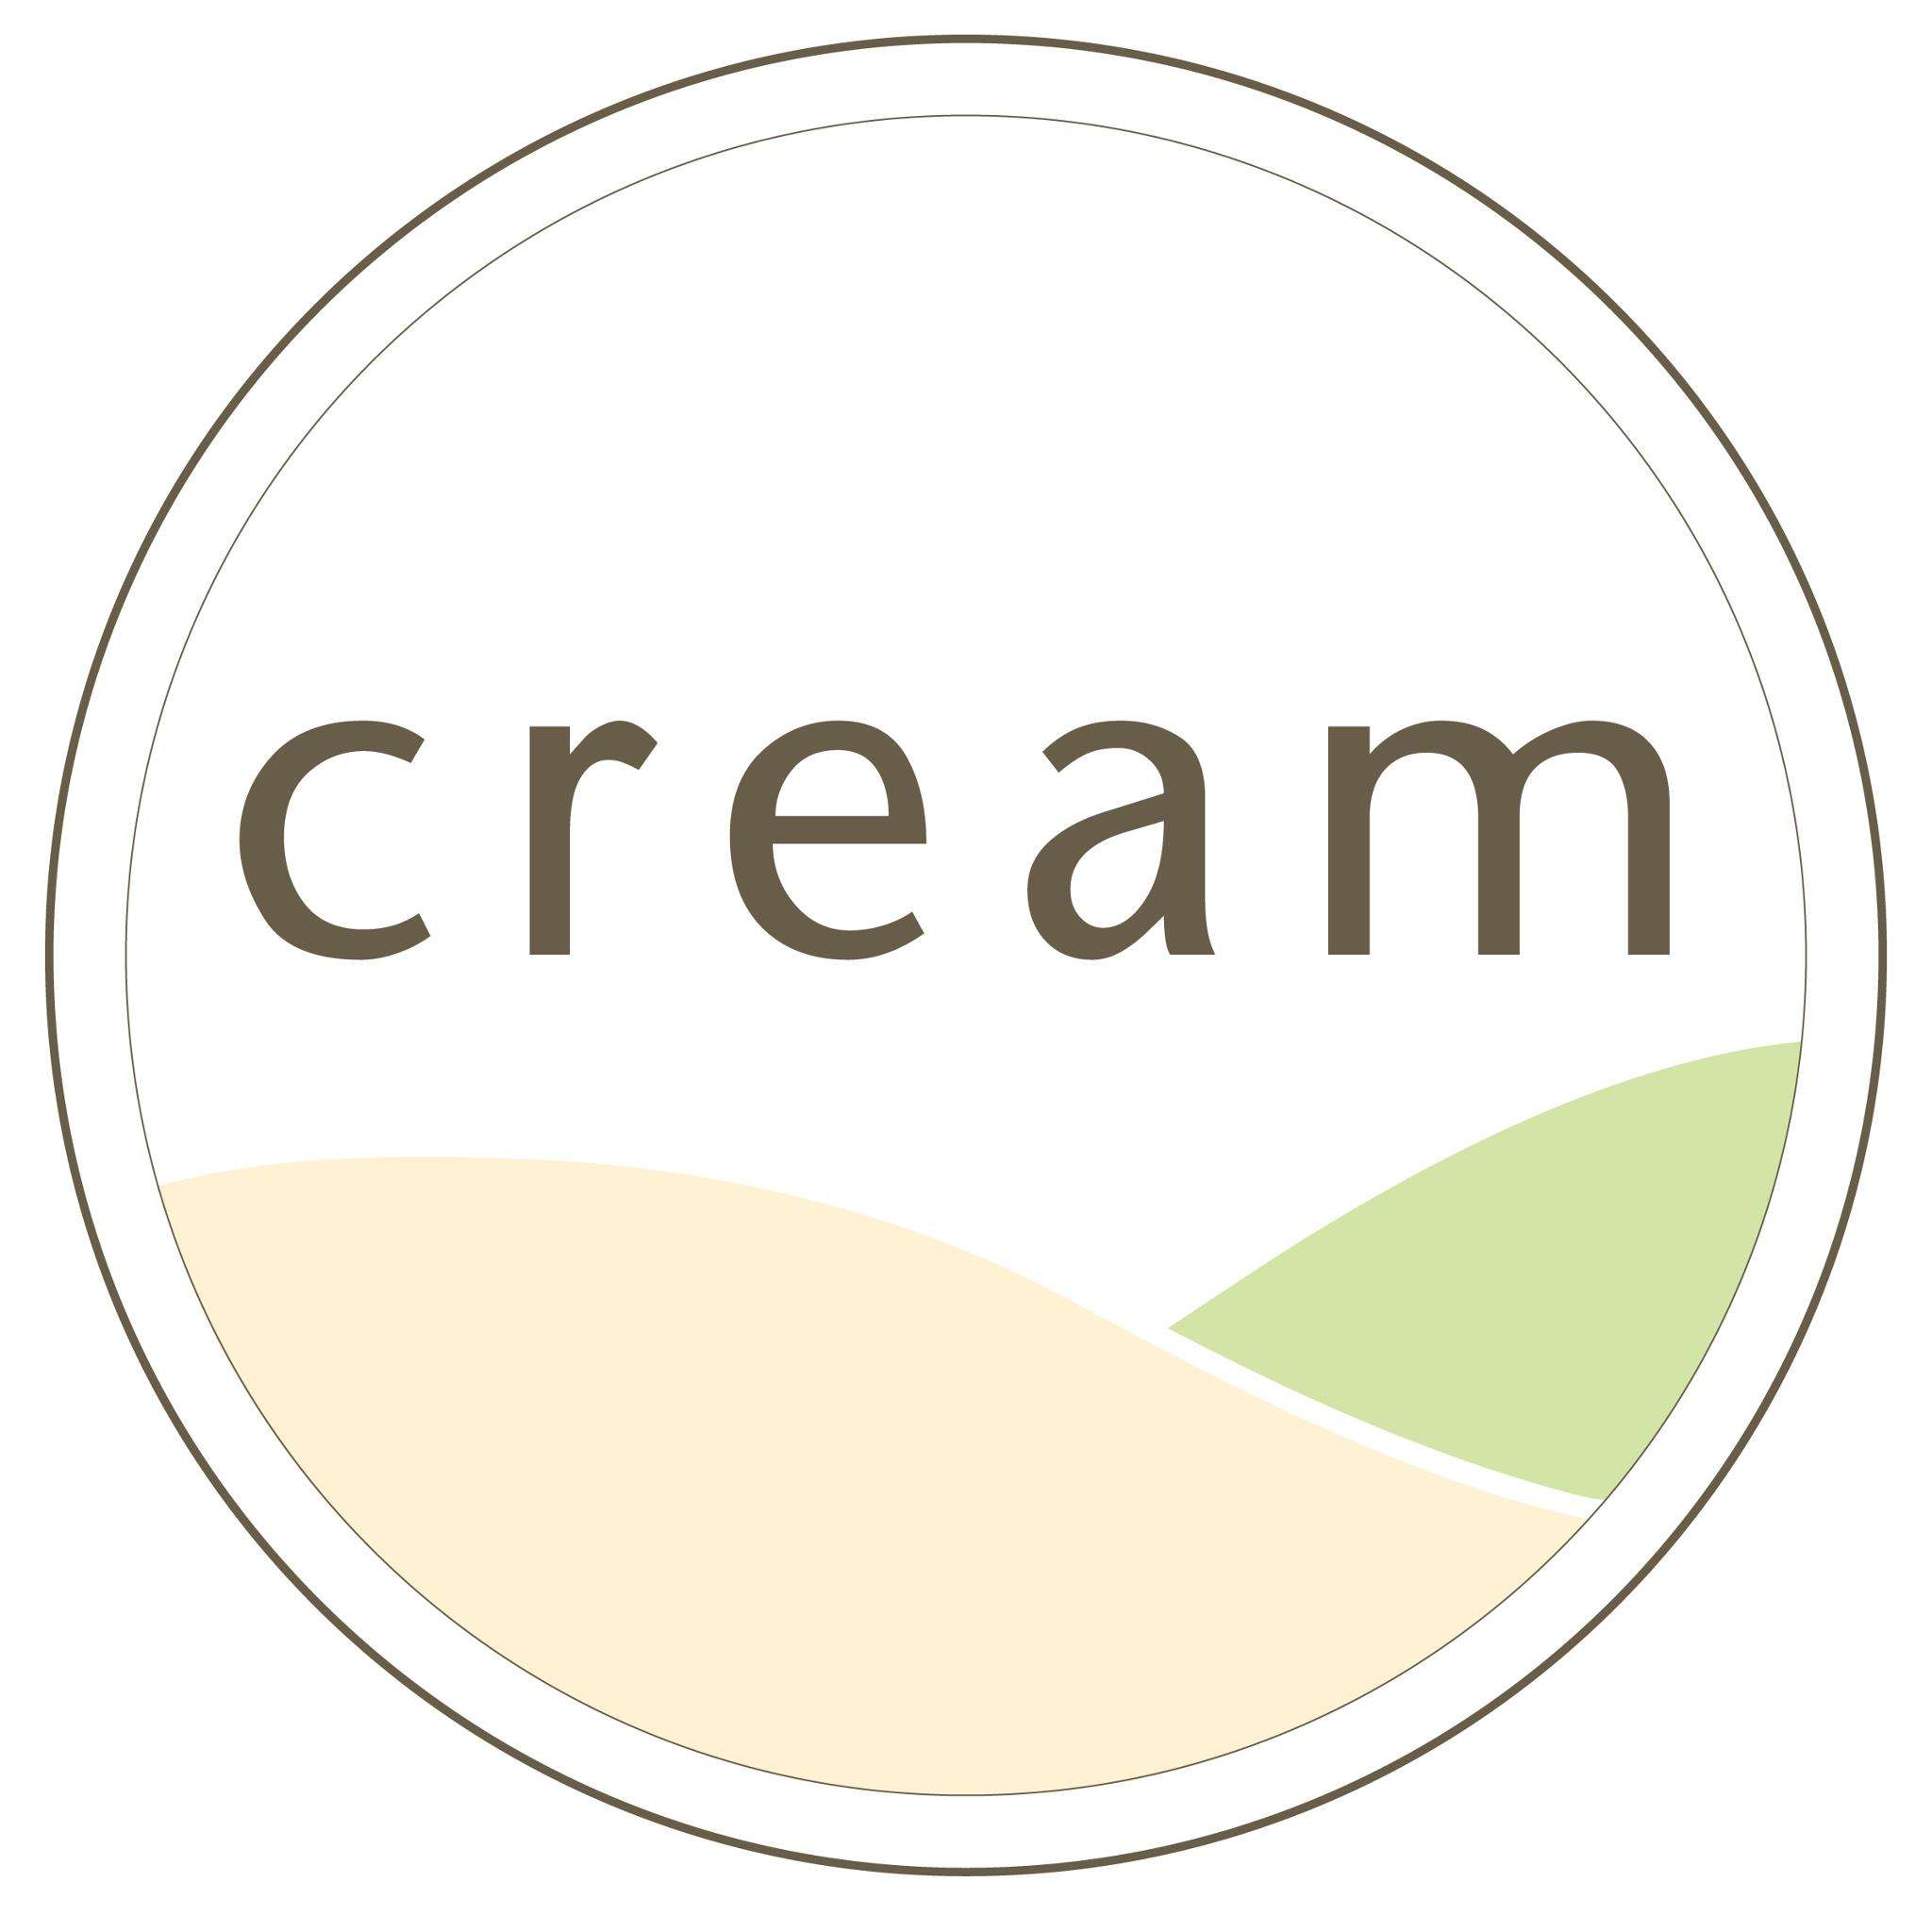 Cream Wine - Crunchbase Company Profile & Funding